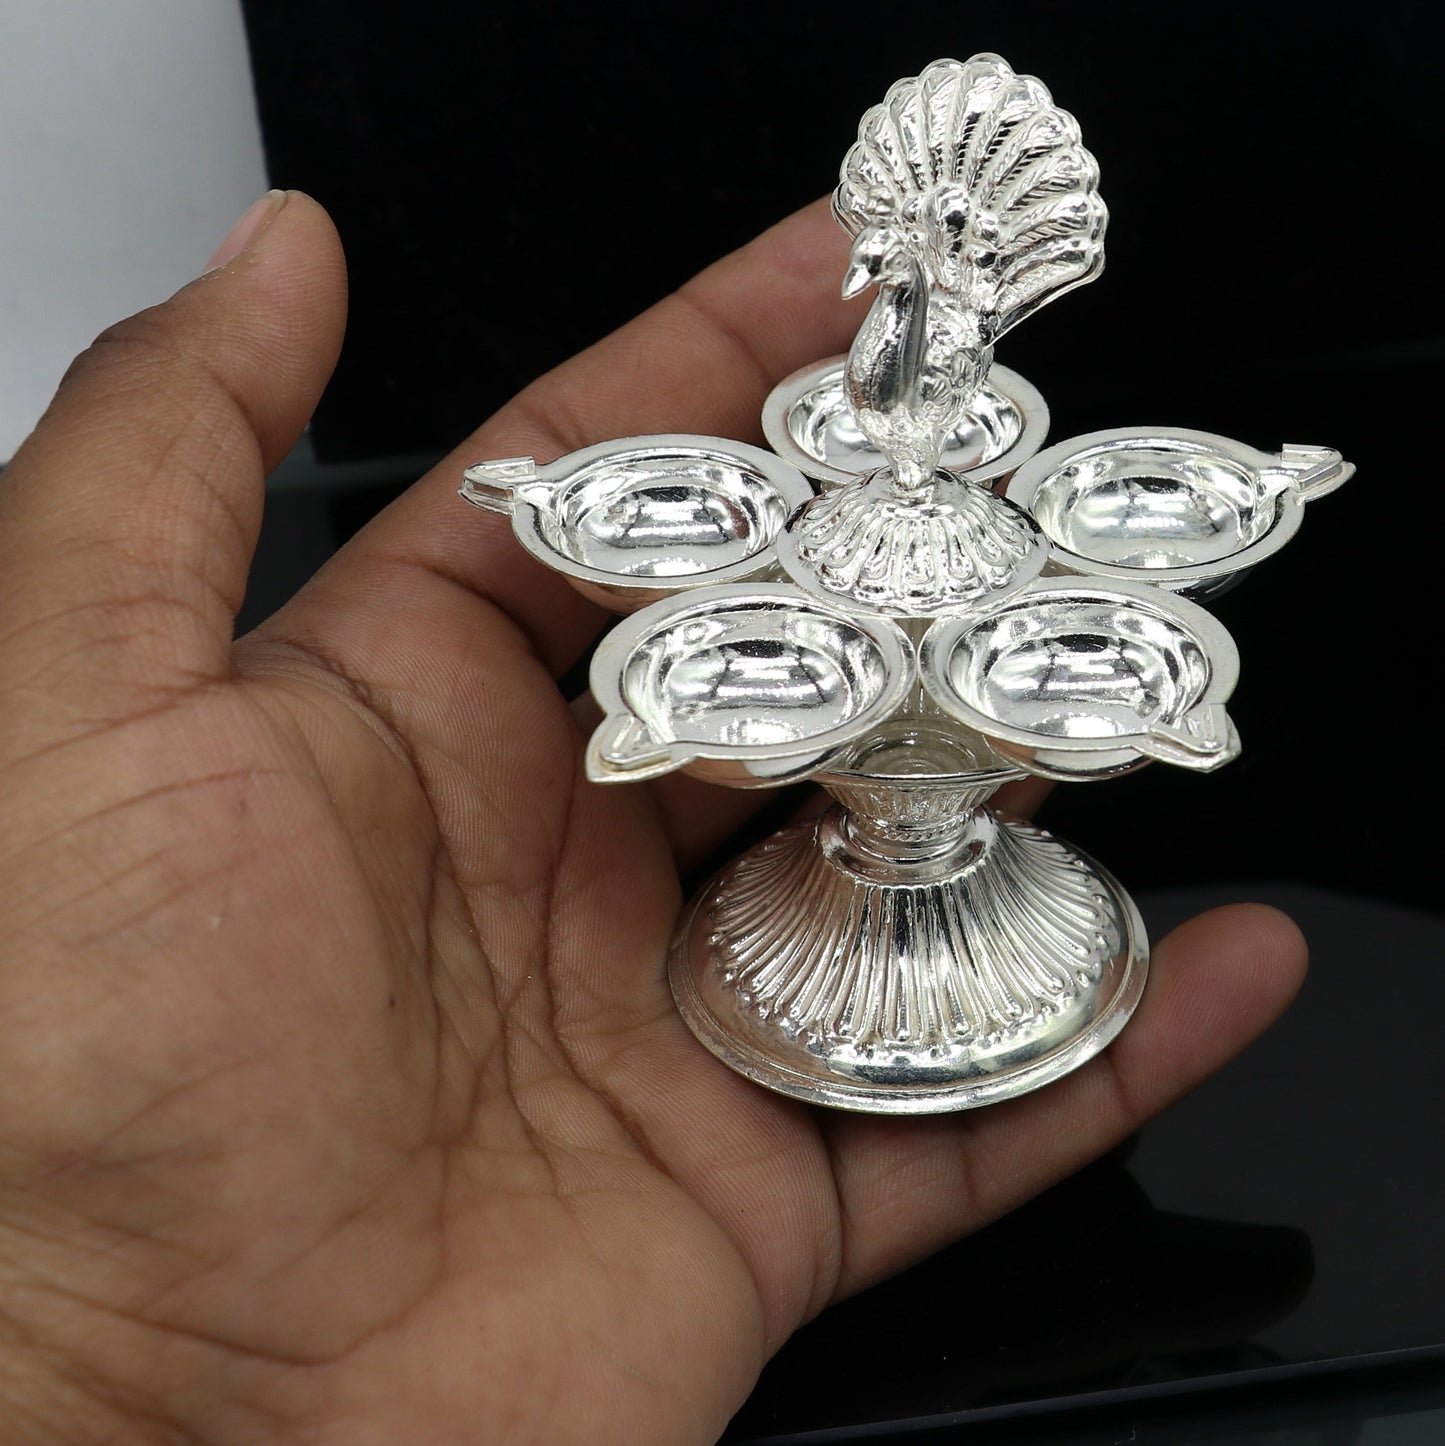 925 sterling silver handcrafted design 5 lamp/ Deepak, silver article, puja utensils, silver figurine su1292 - TRIBAL ORNAMENTS